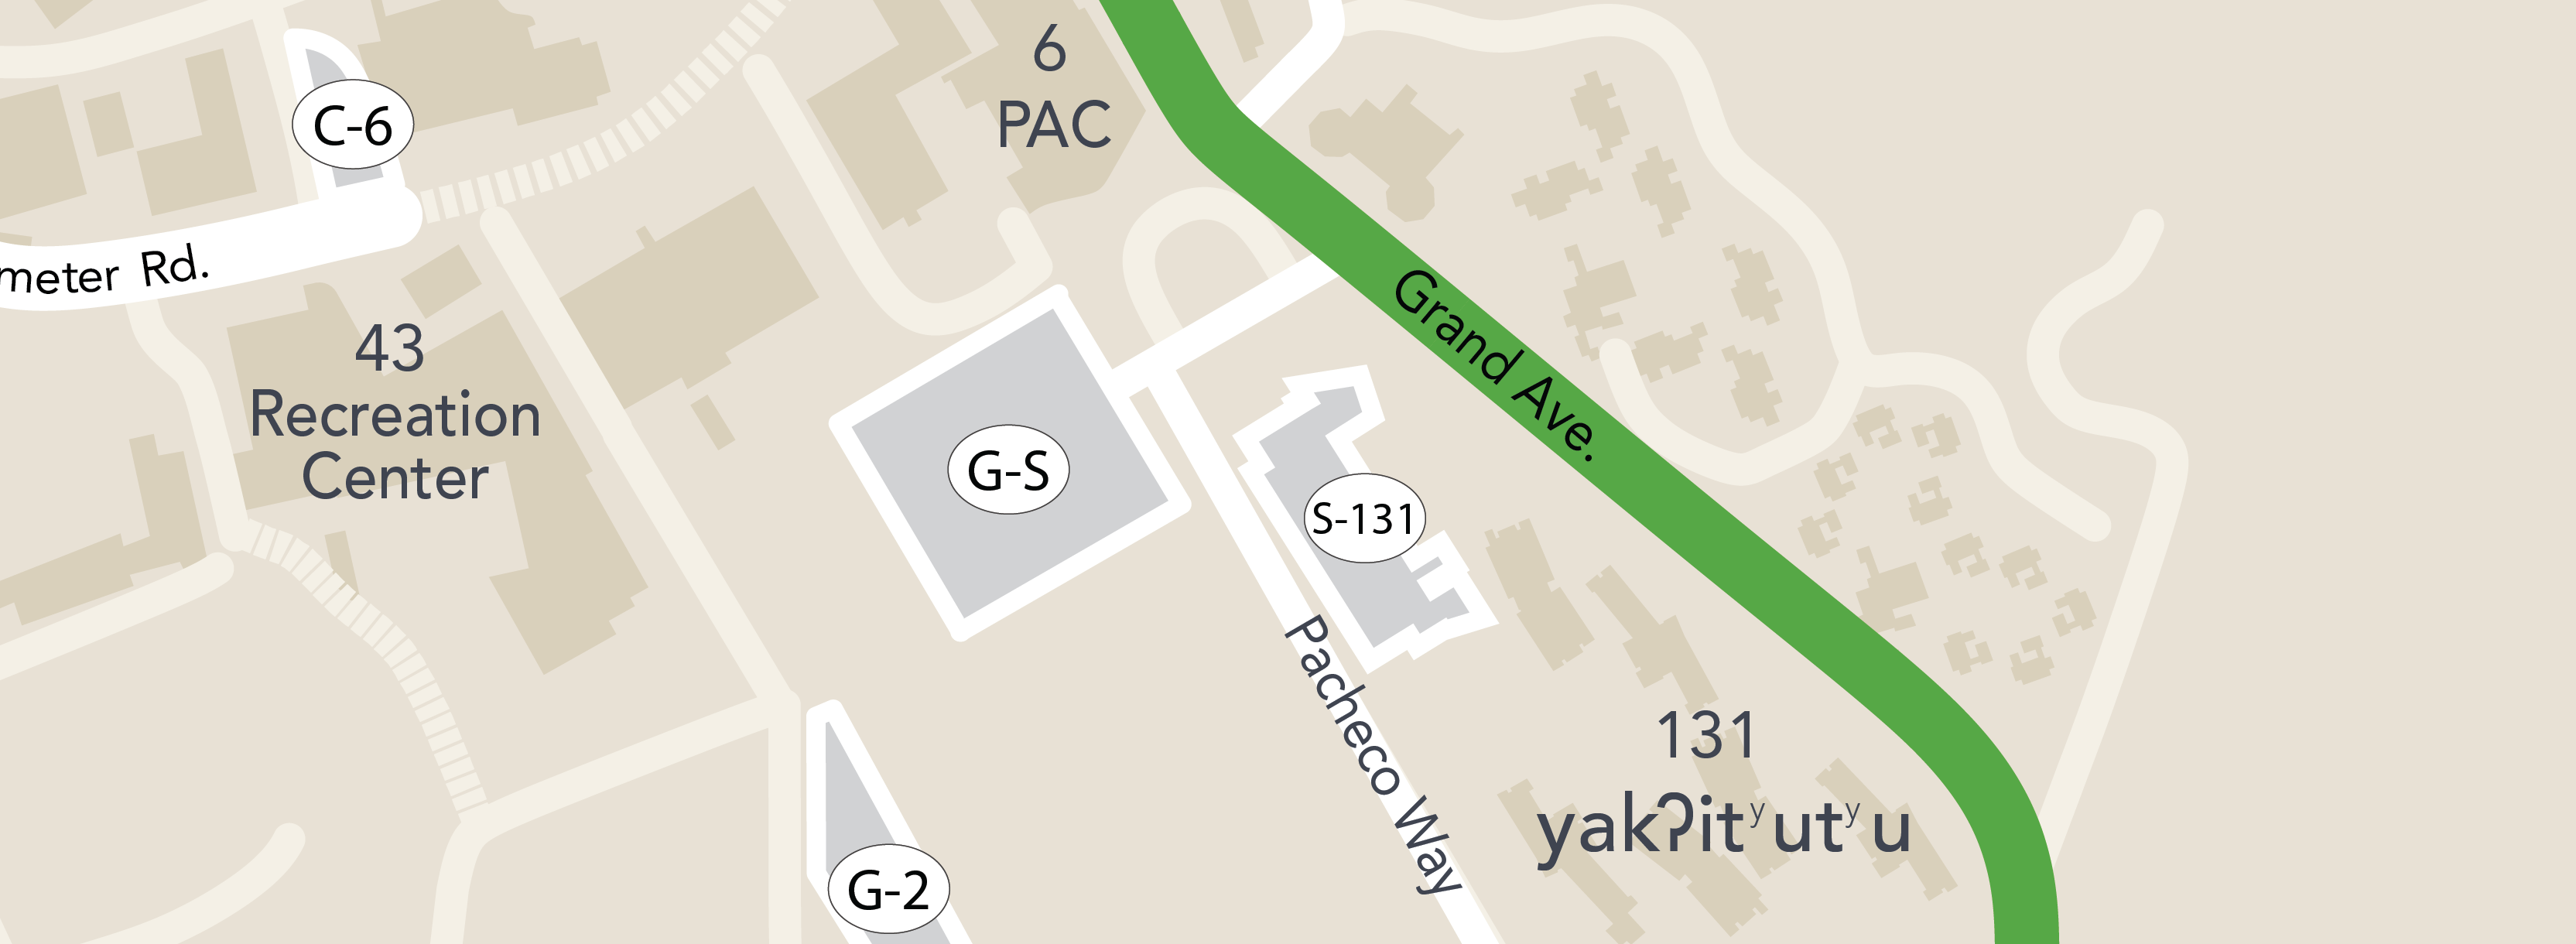 parking Lot Grand Avenue map